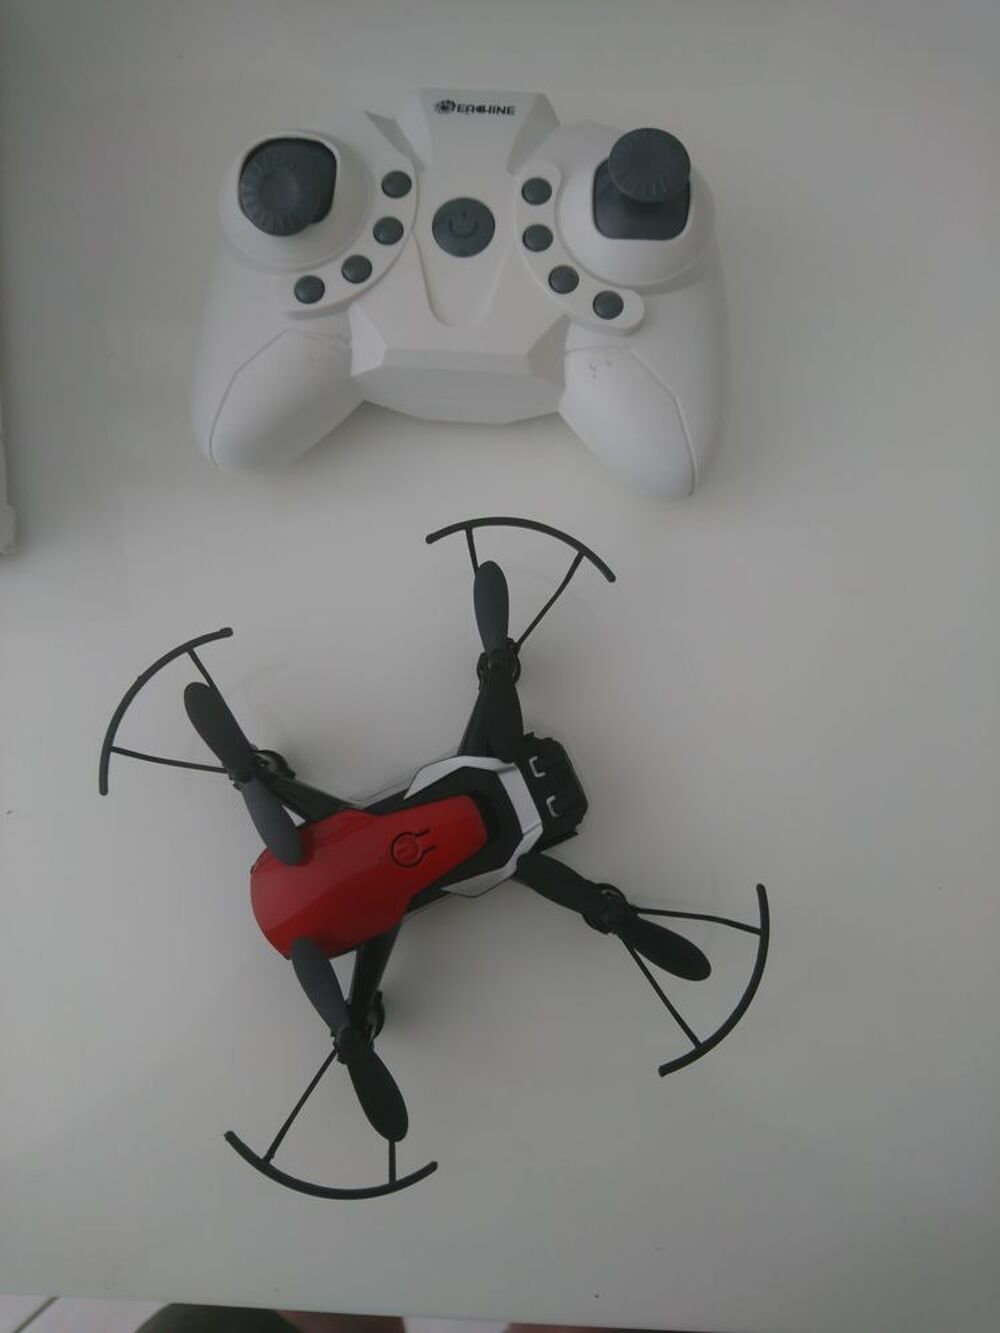  Drone Eachine E61series Mini Jeux / jouets